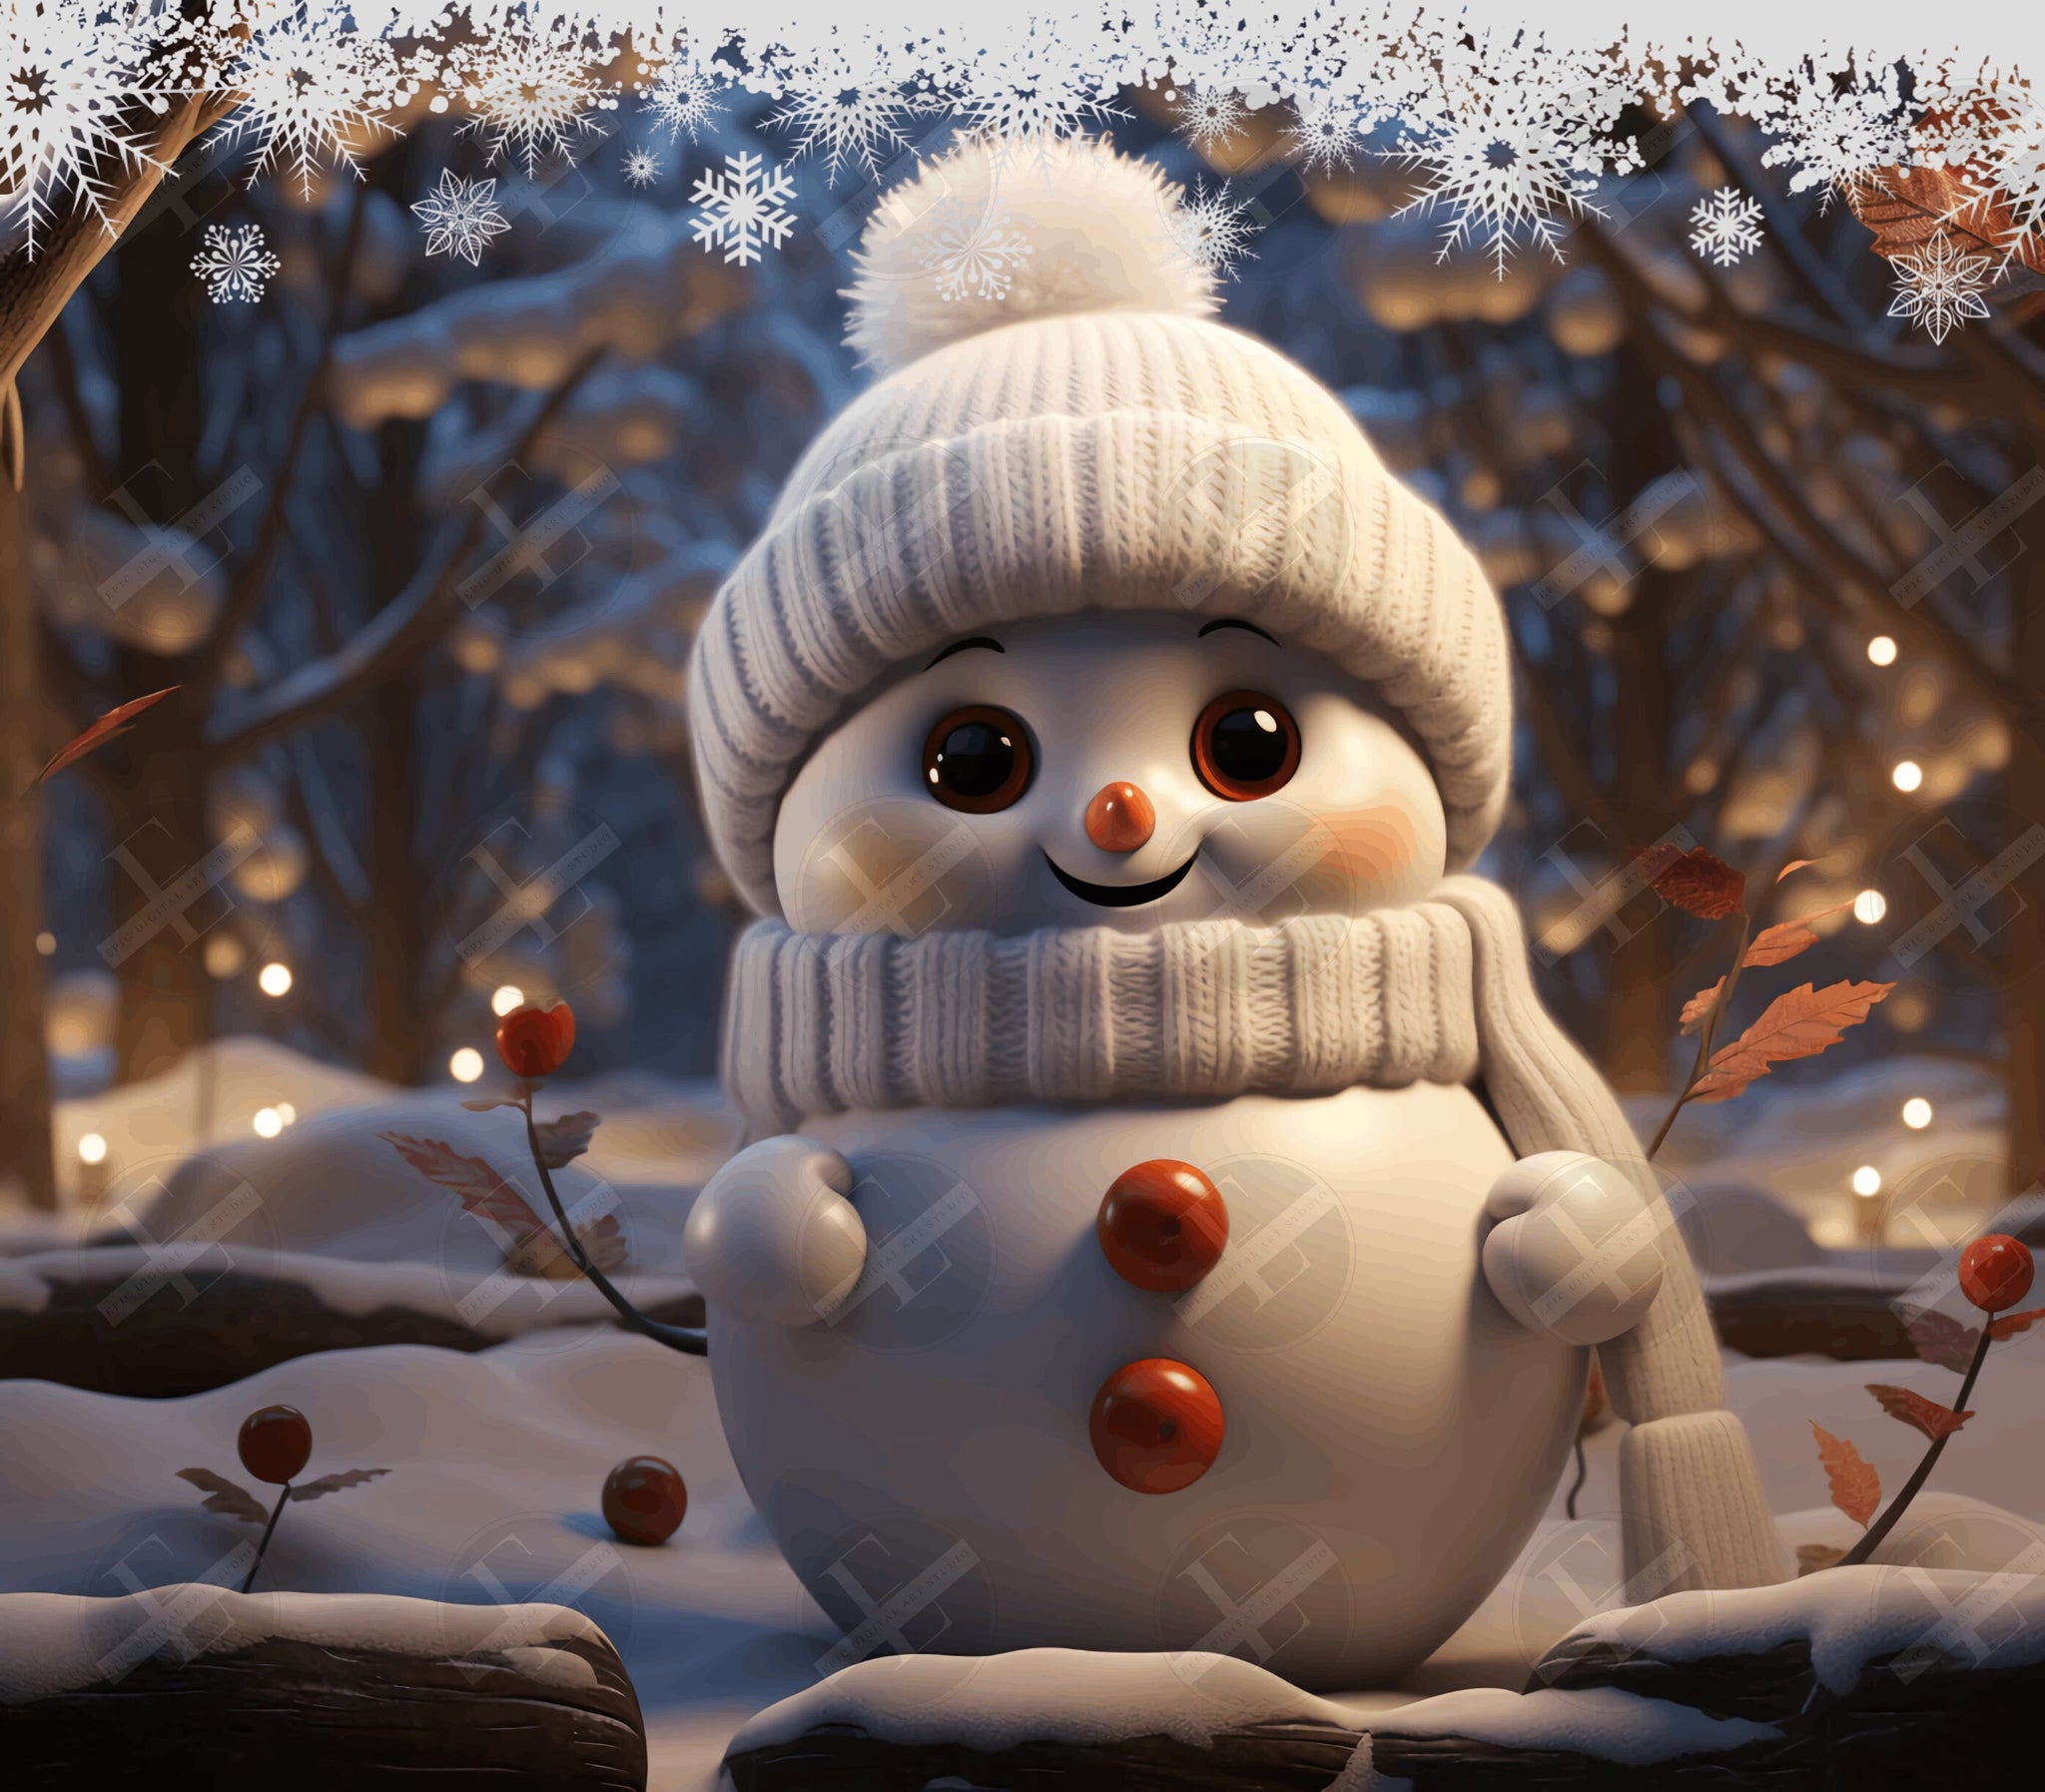 3D Tumbler Wraps - Snowman Christmas Tumbler Wraps - Skinny Tumbler Wrap Design - Sublimation Designs Straight & Tapered - Instant Download